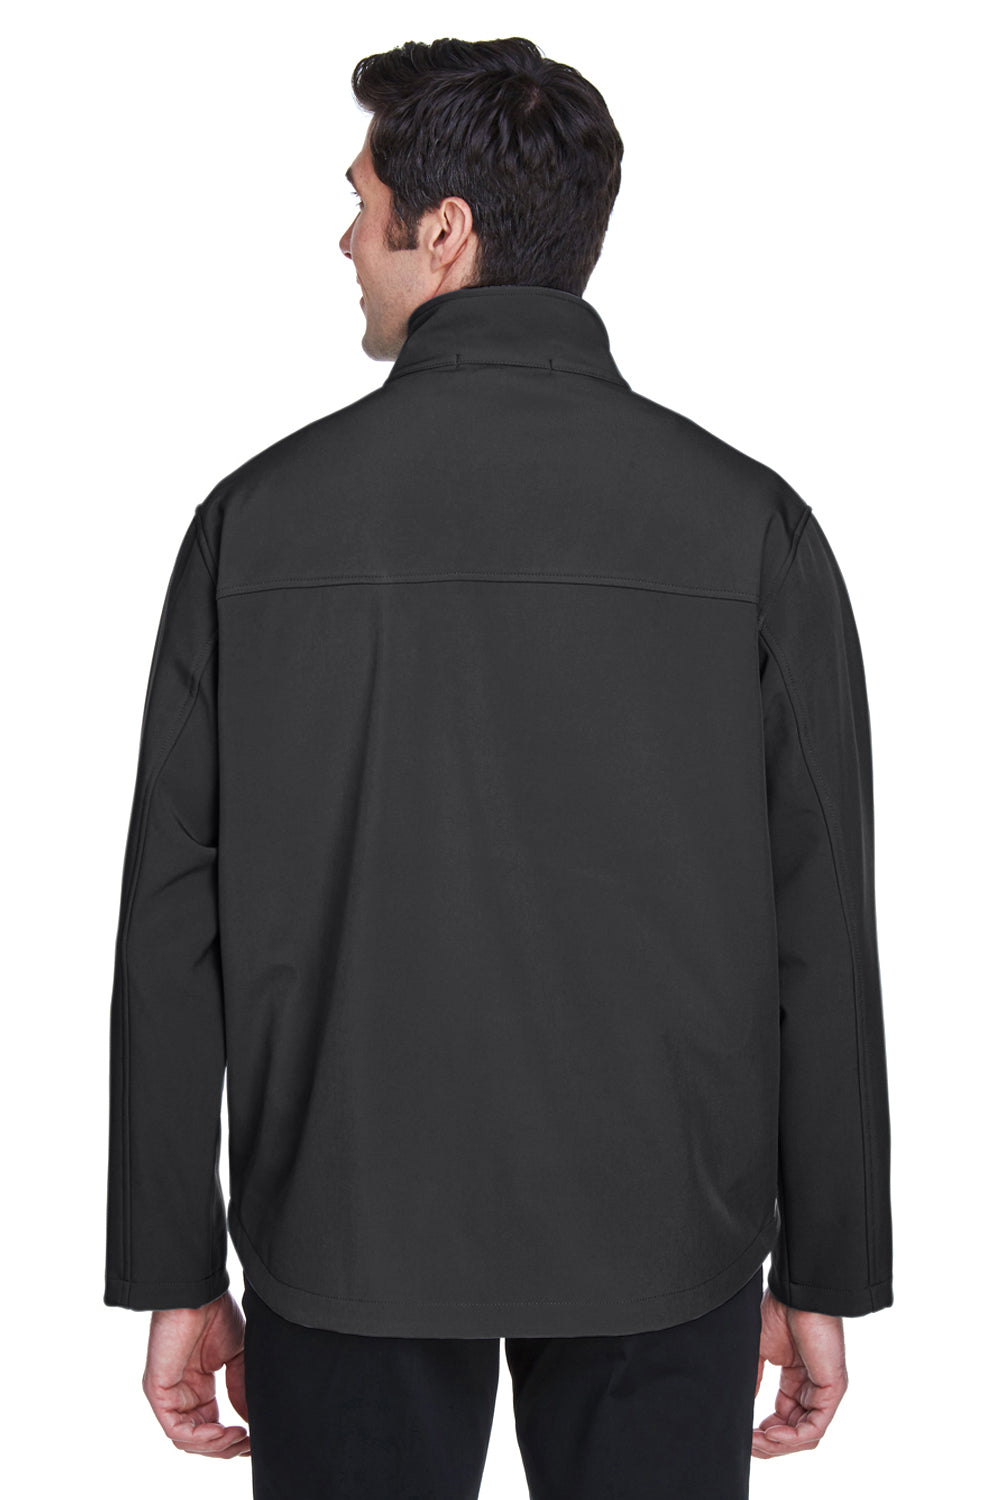 Devon & Jones D995 Mens Wind & Water Resistant Full Zip Jacket Black Back